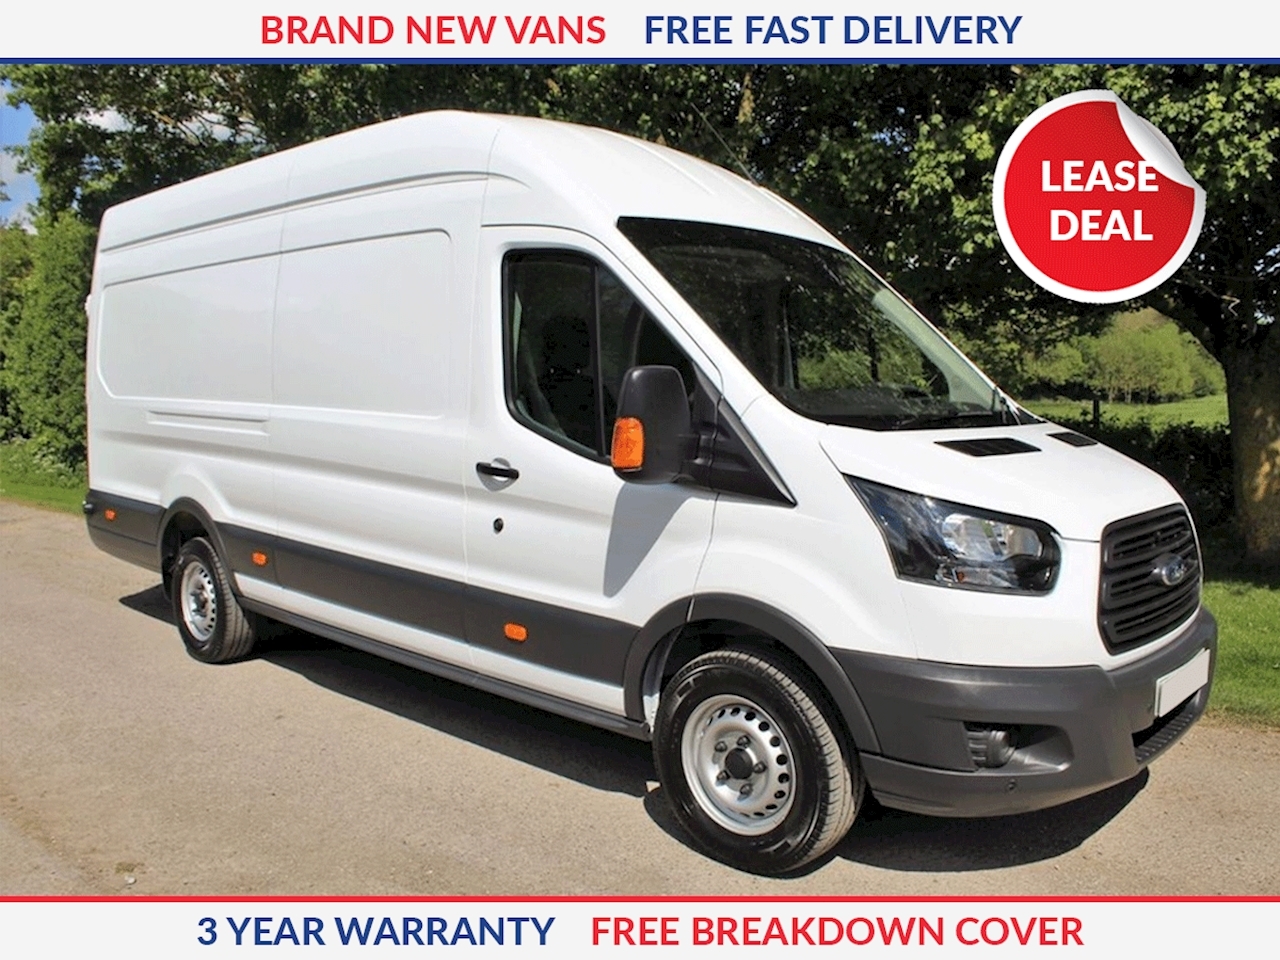 large van for sale uk